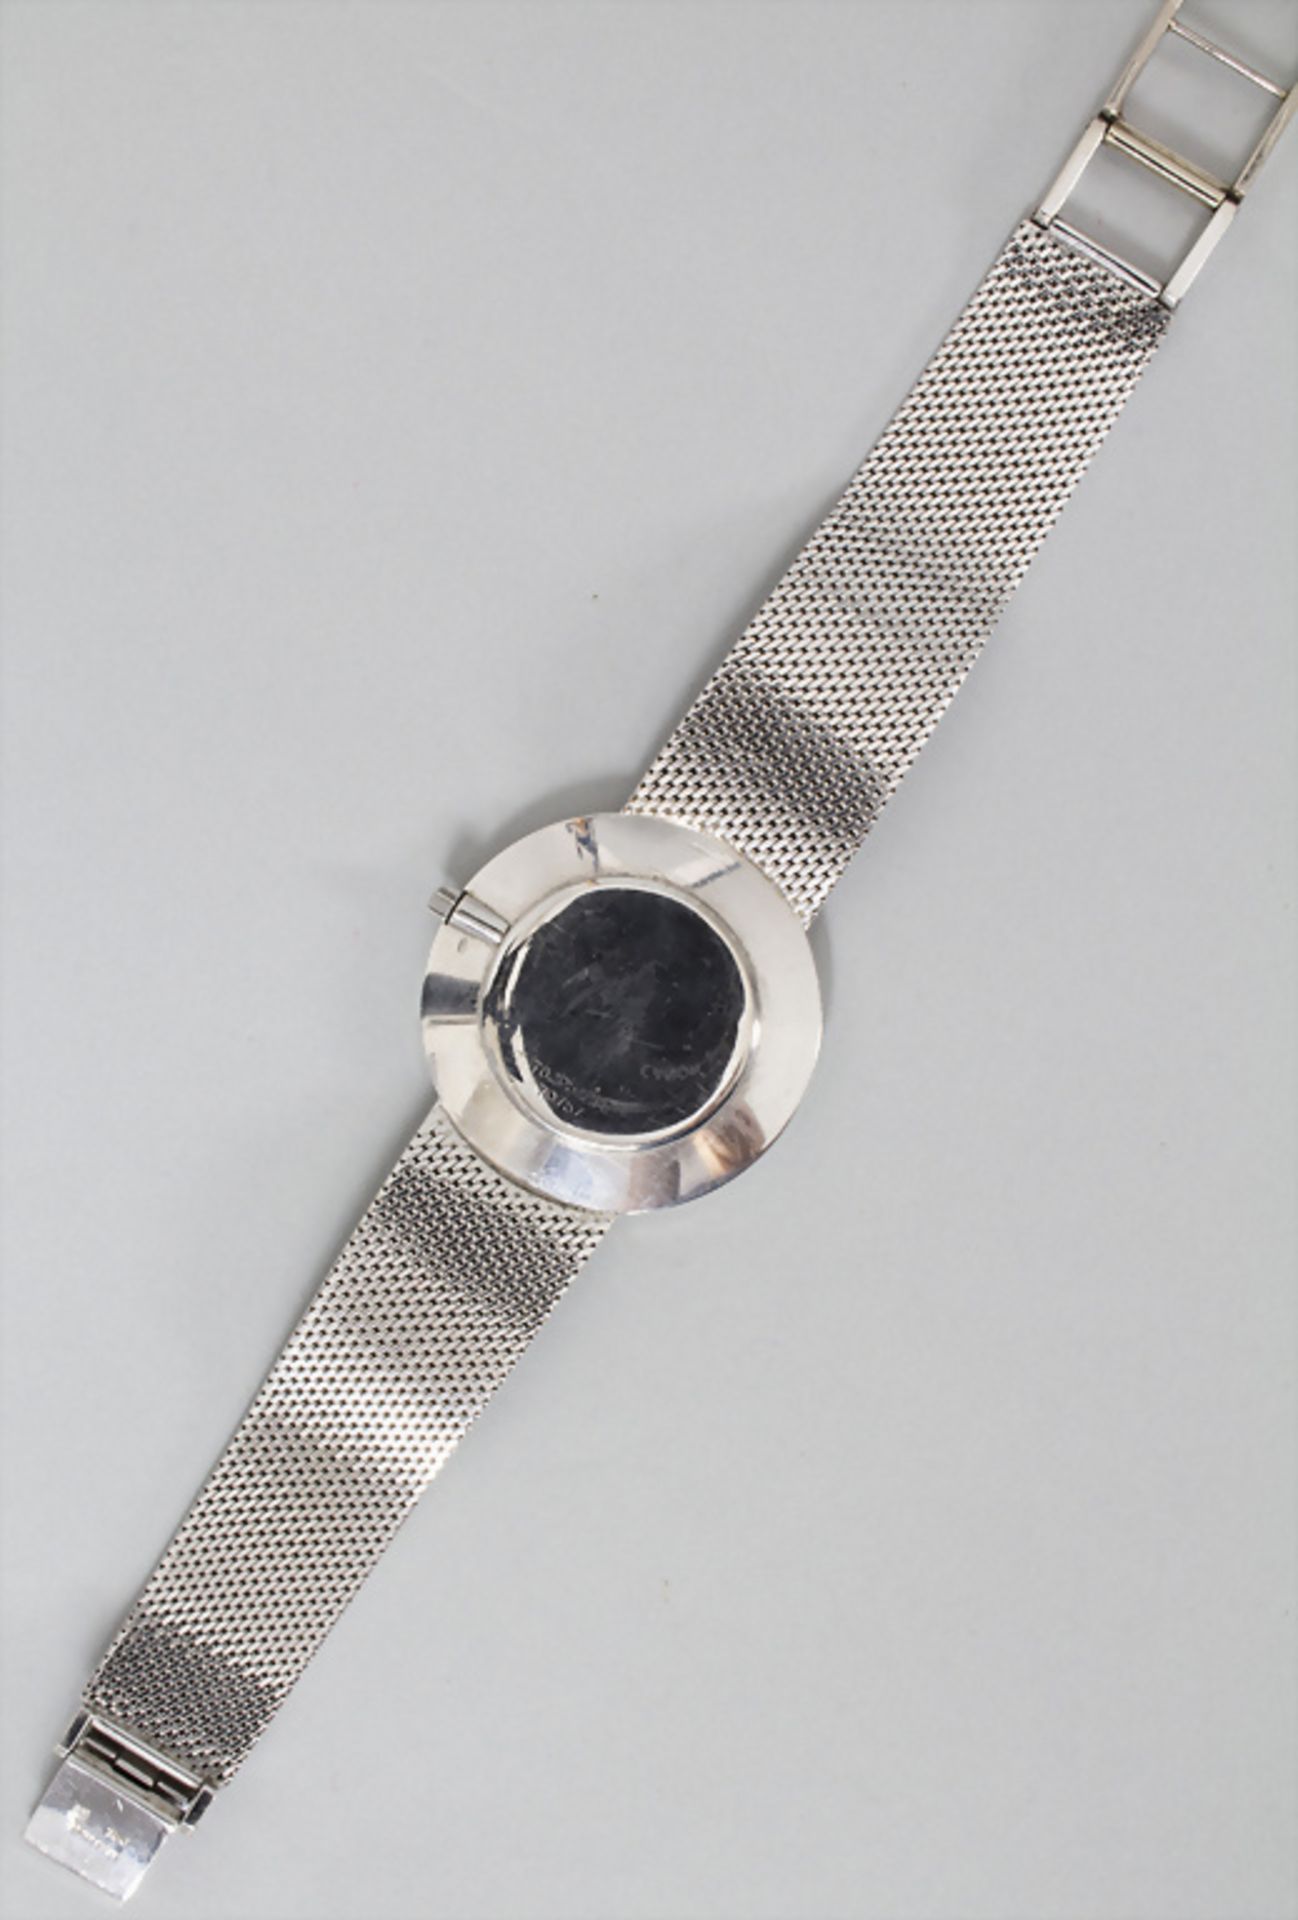 Herrenarmbanduhr / A men's wristwatch, Universal Géneve, Swiss, um 1970 - Image 4 of 4